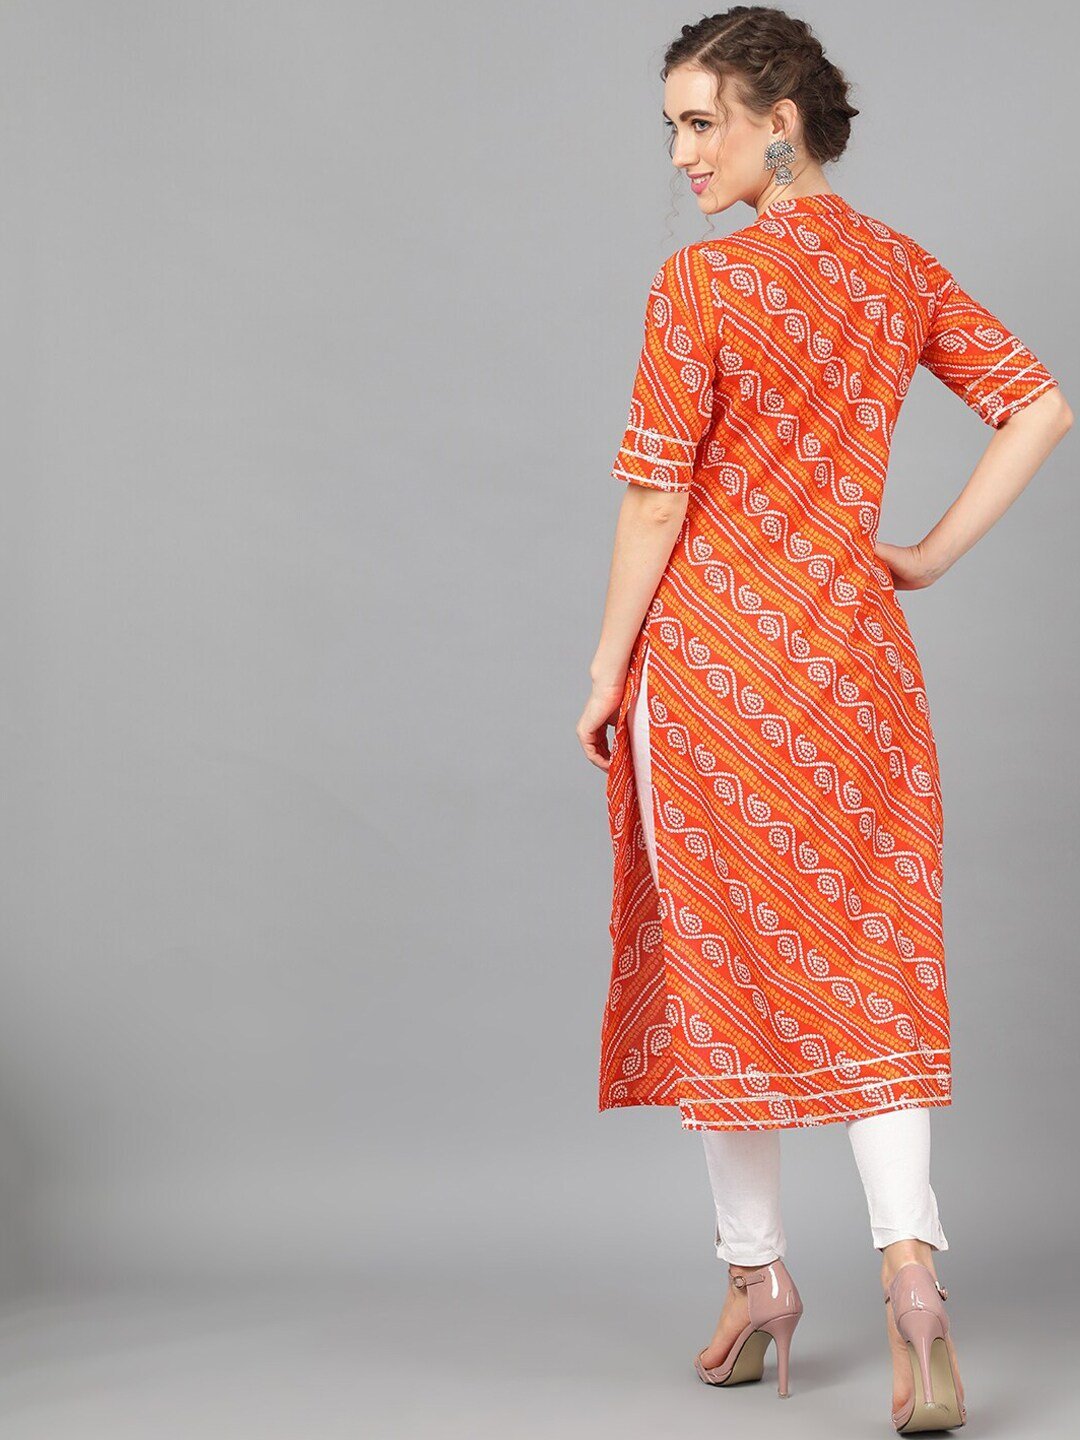 Women's  Orange & White Printed A-Line Kurta - AKS